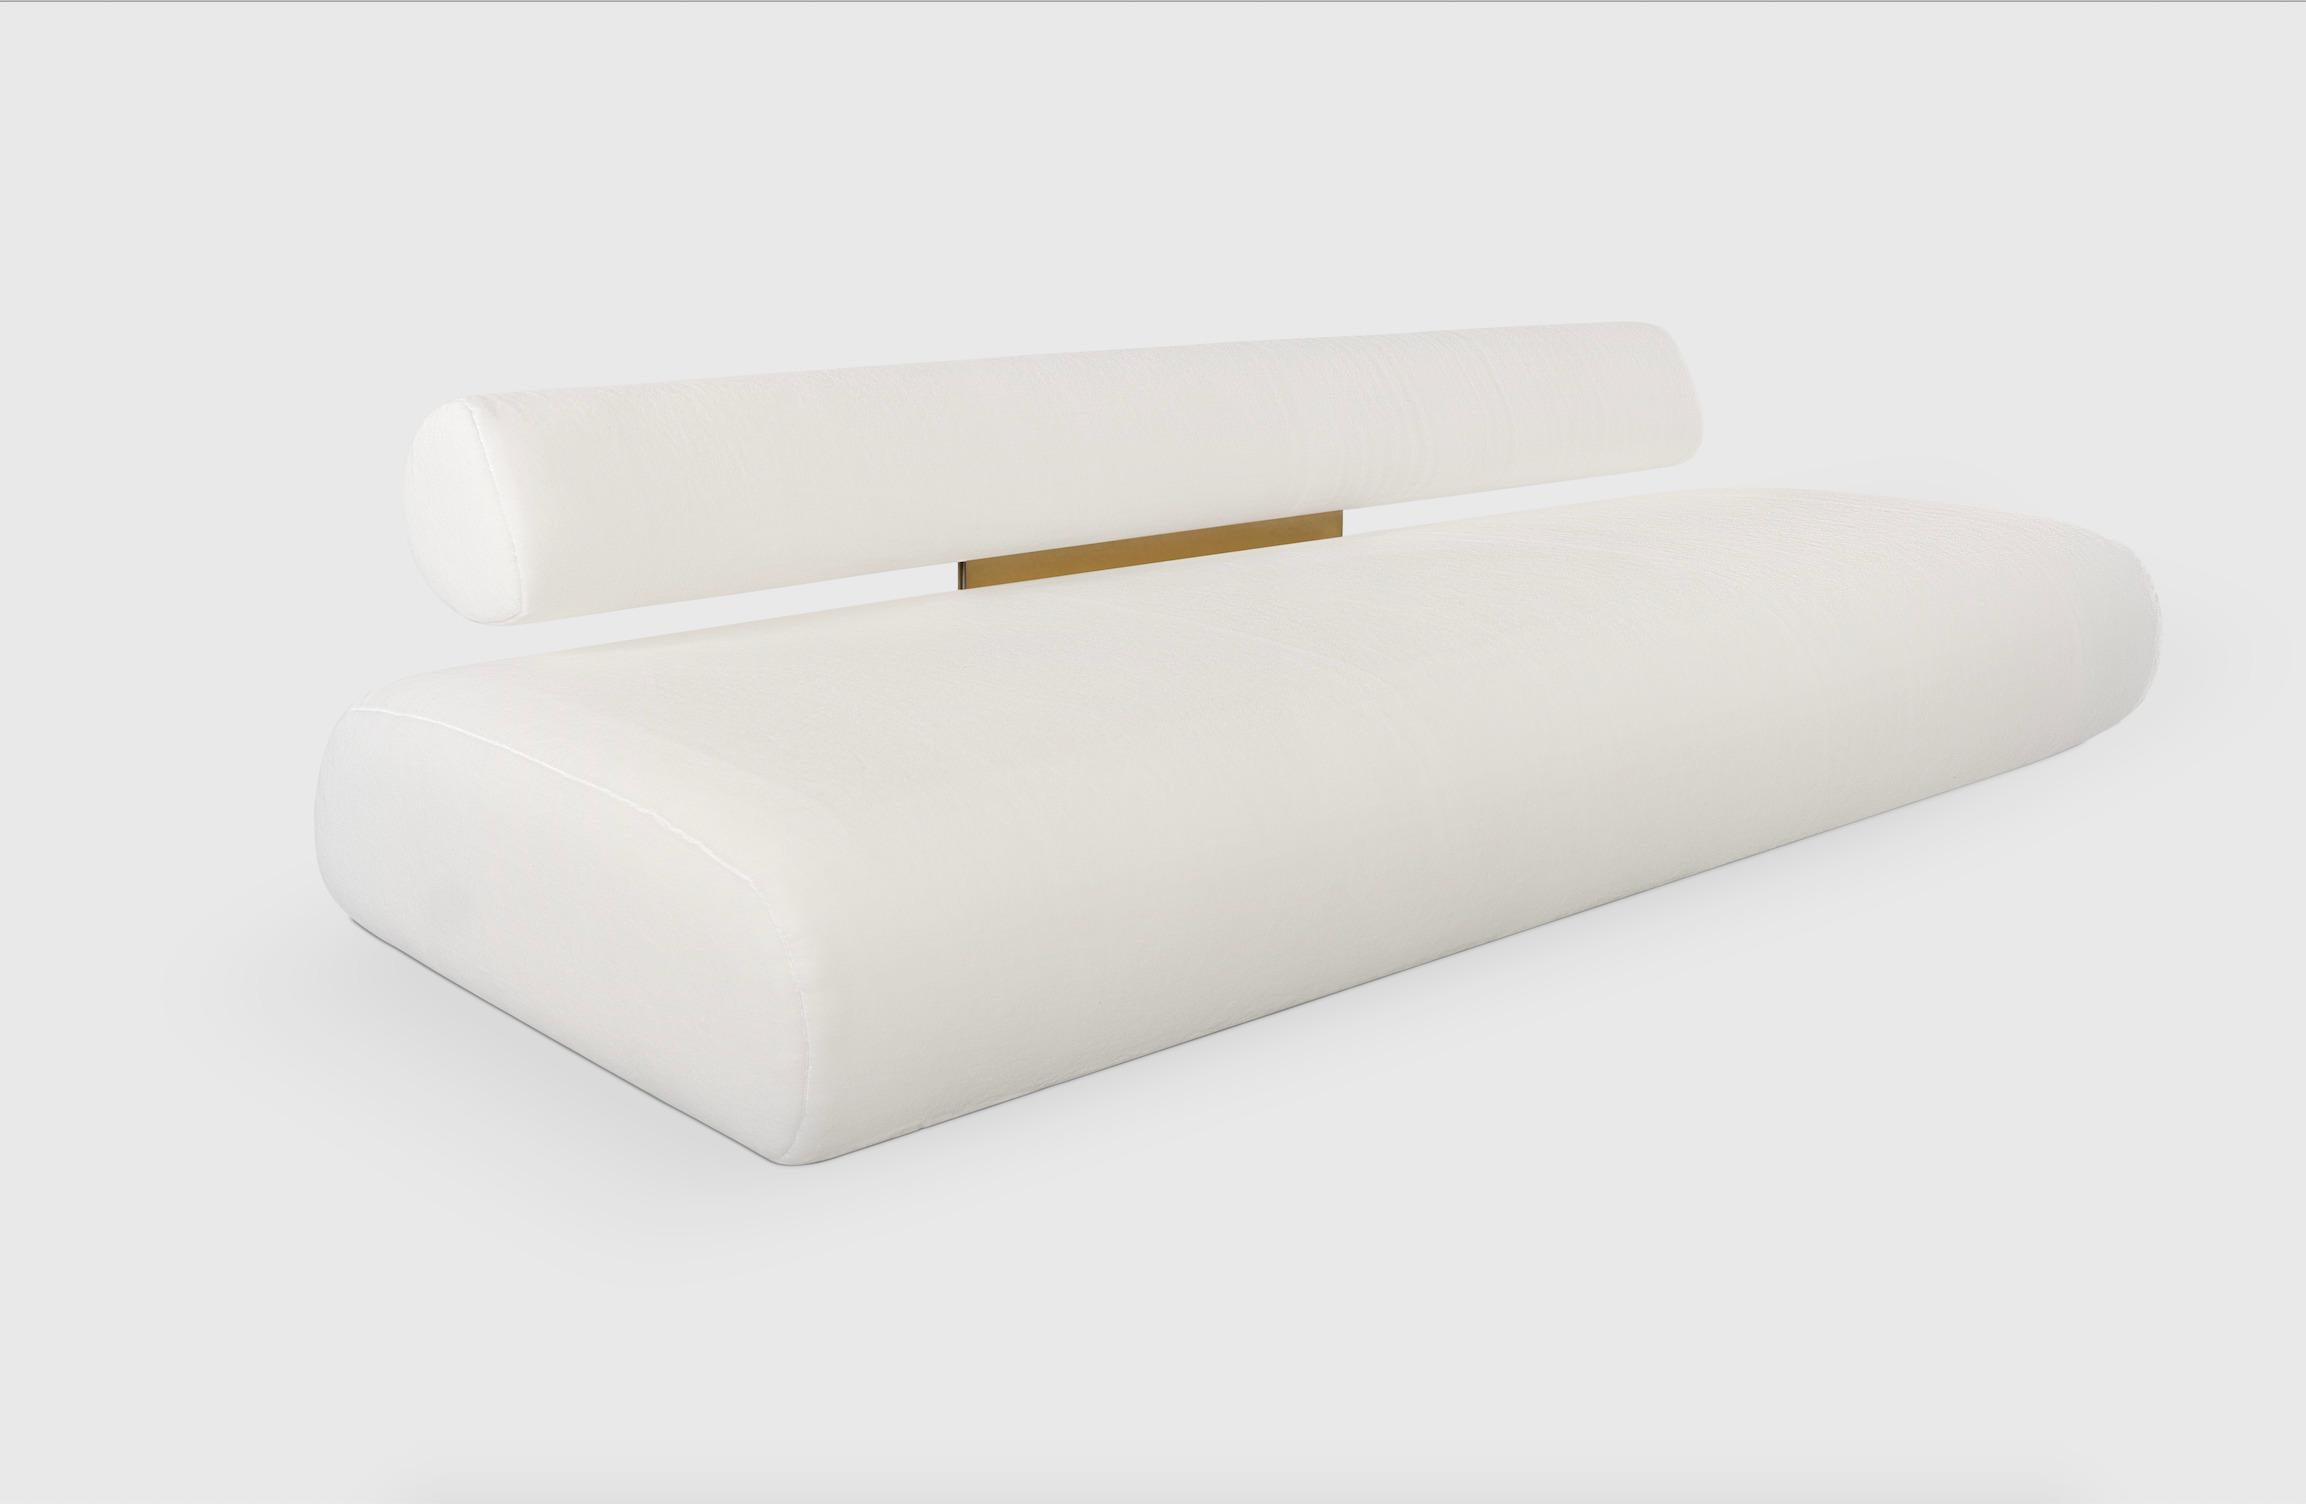 Presented by 'Tuleste Factory' for Market Art & Design
Baby beluga sofa
Ref: 1032